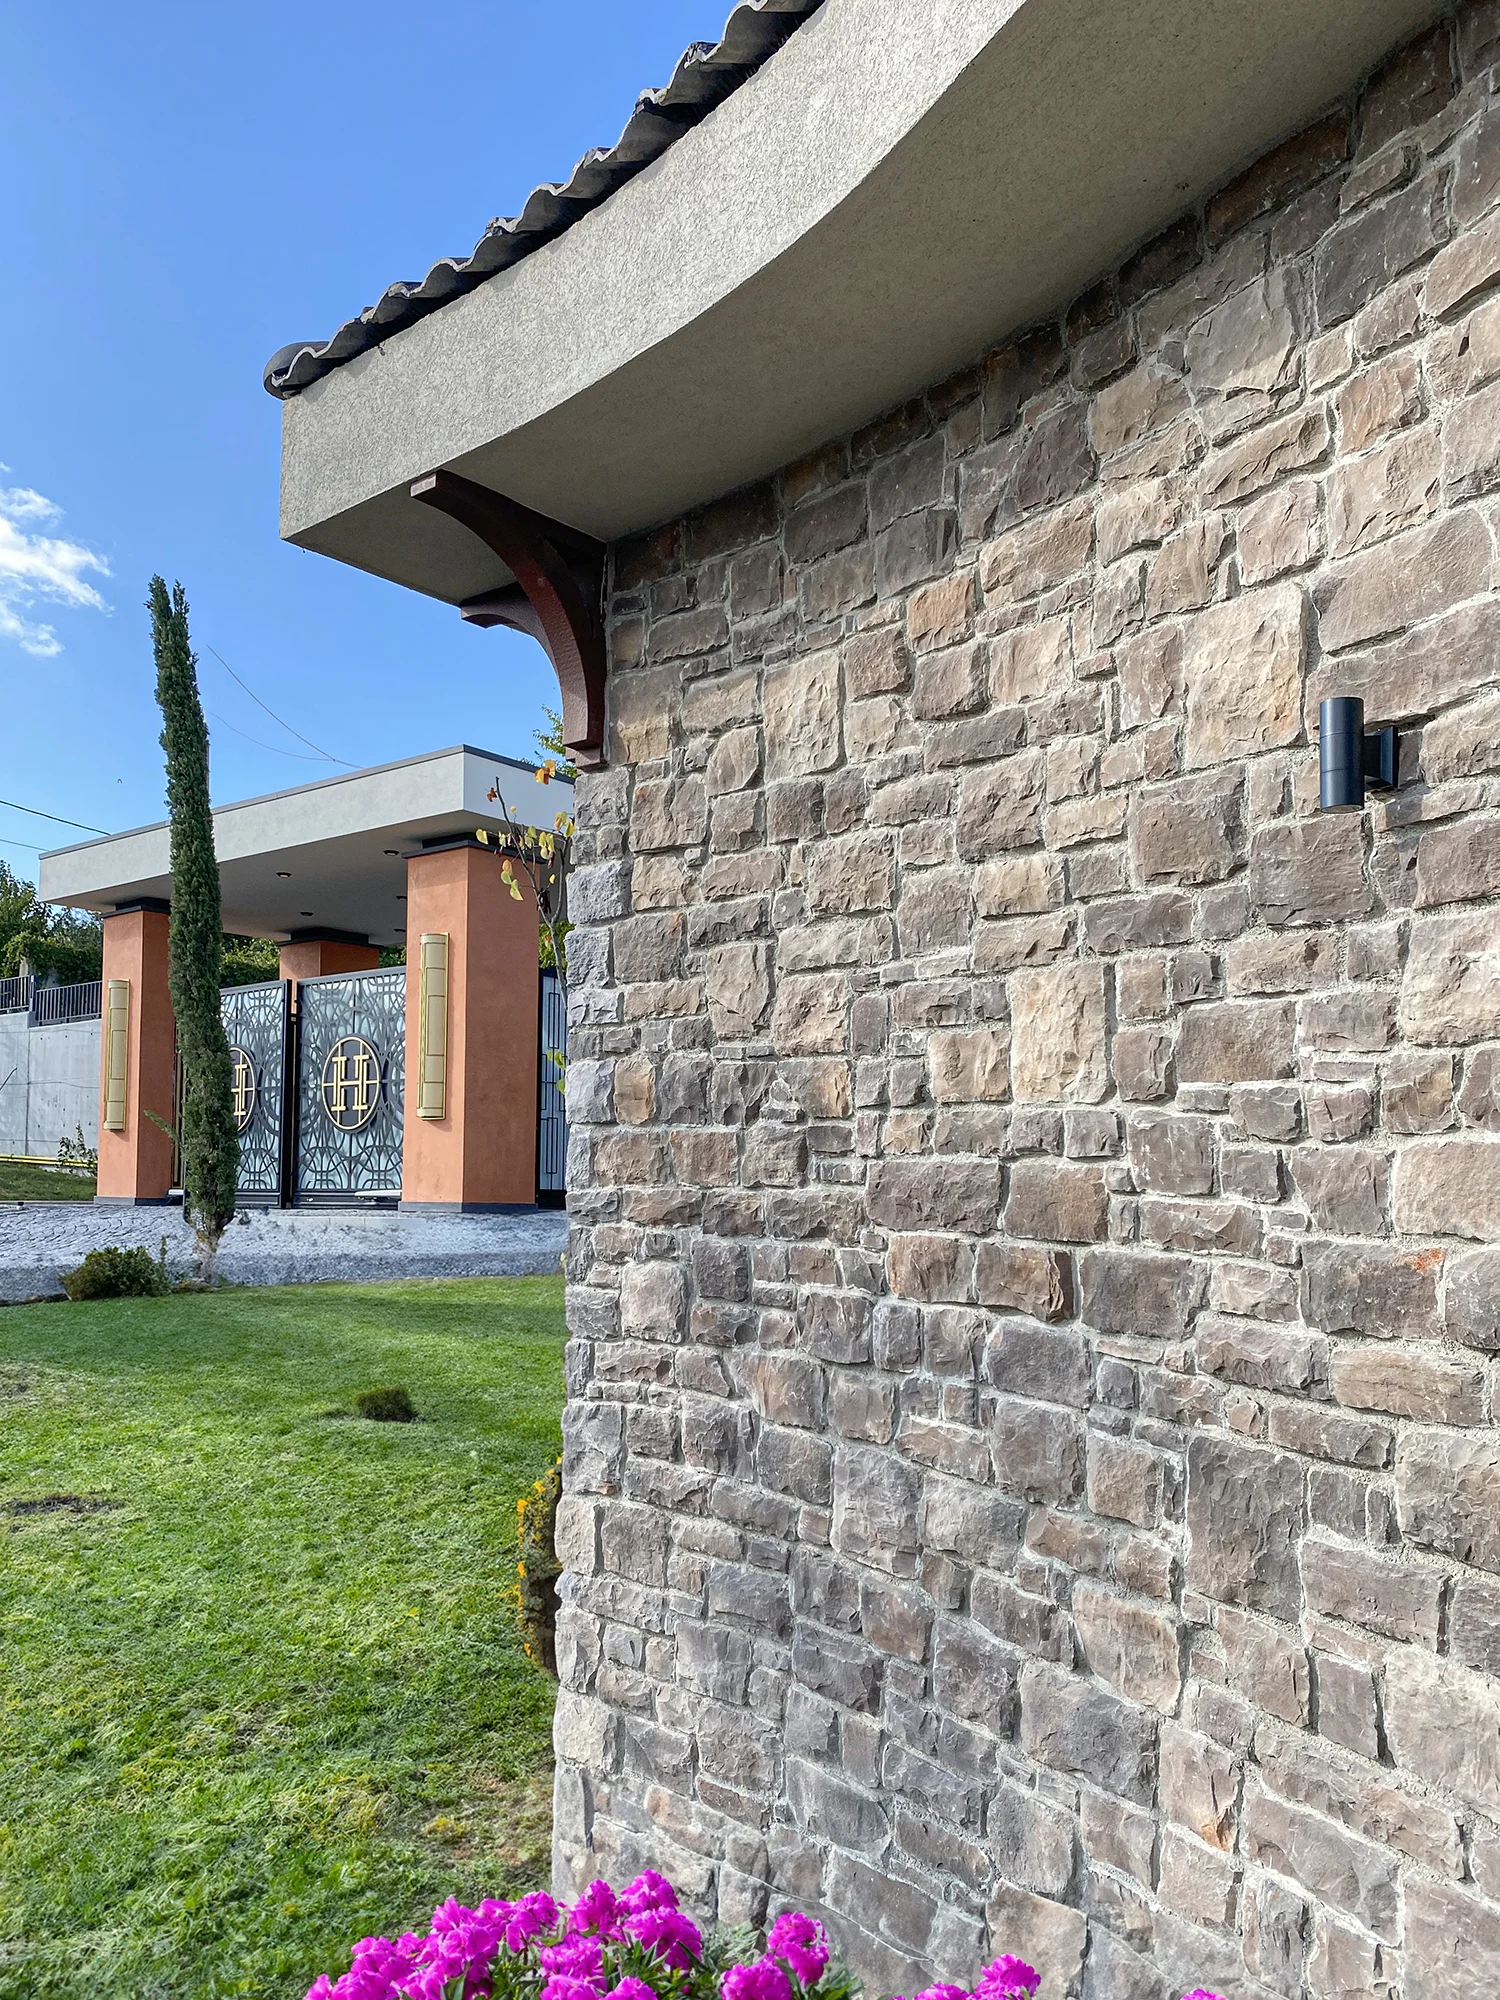 A private villa with Manufactured Stone walls